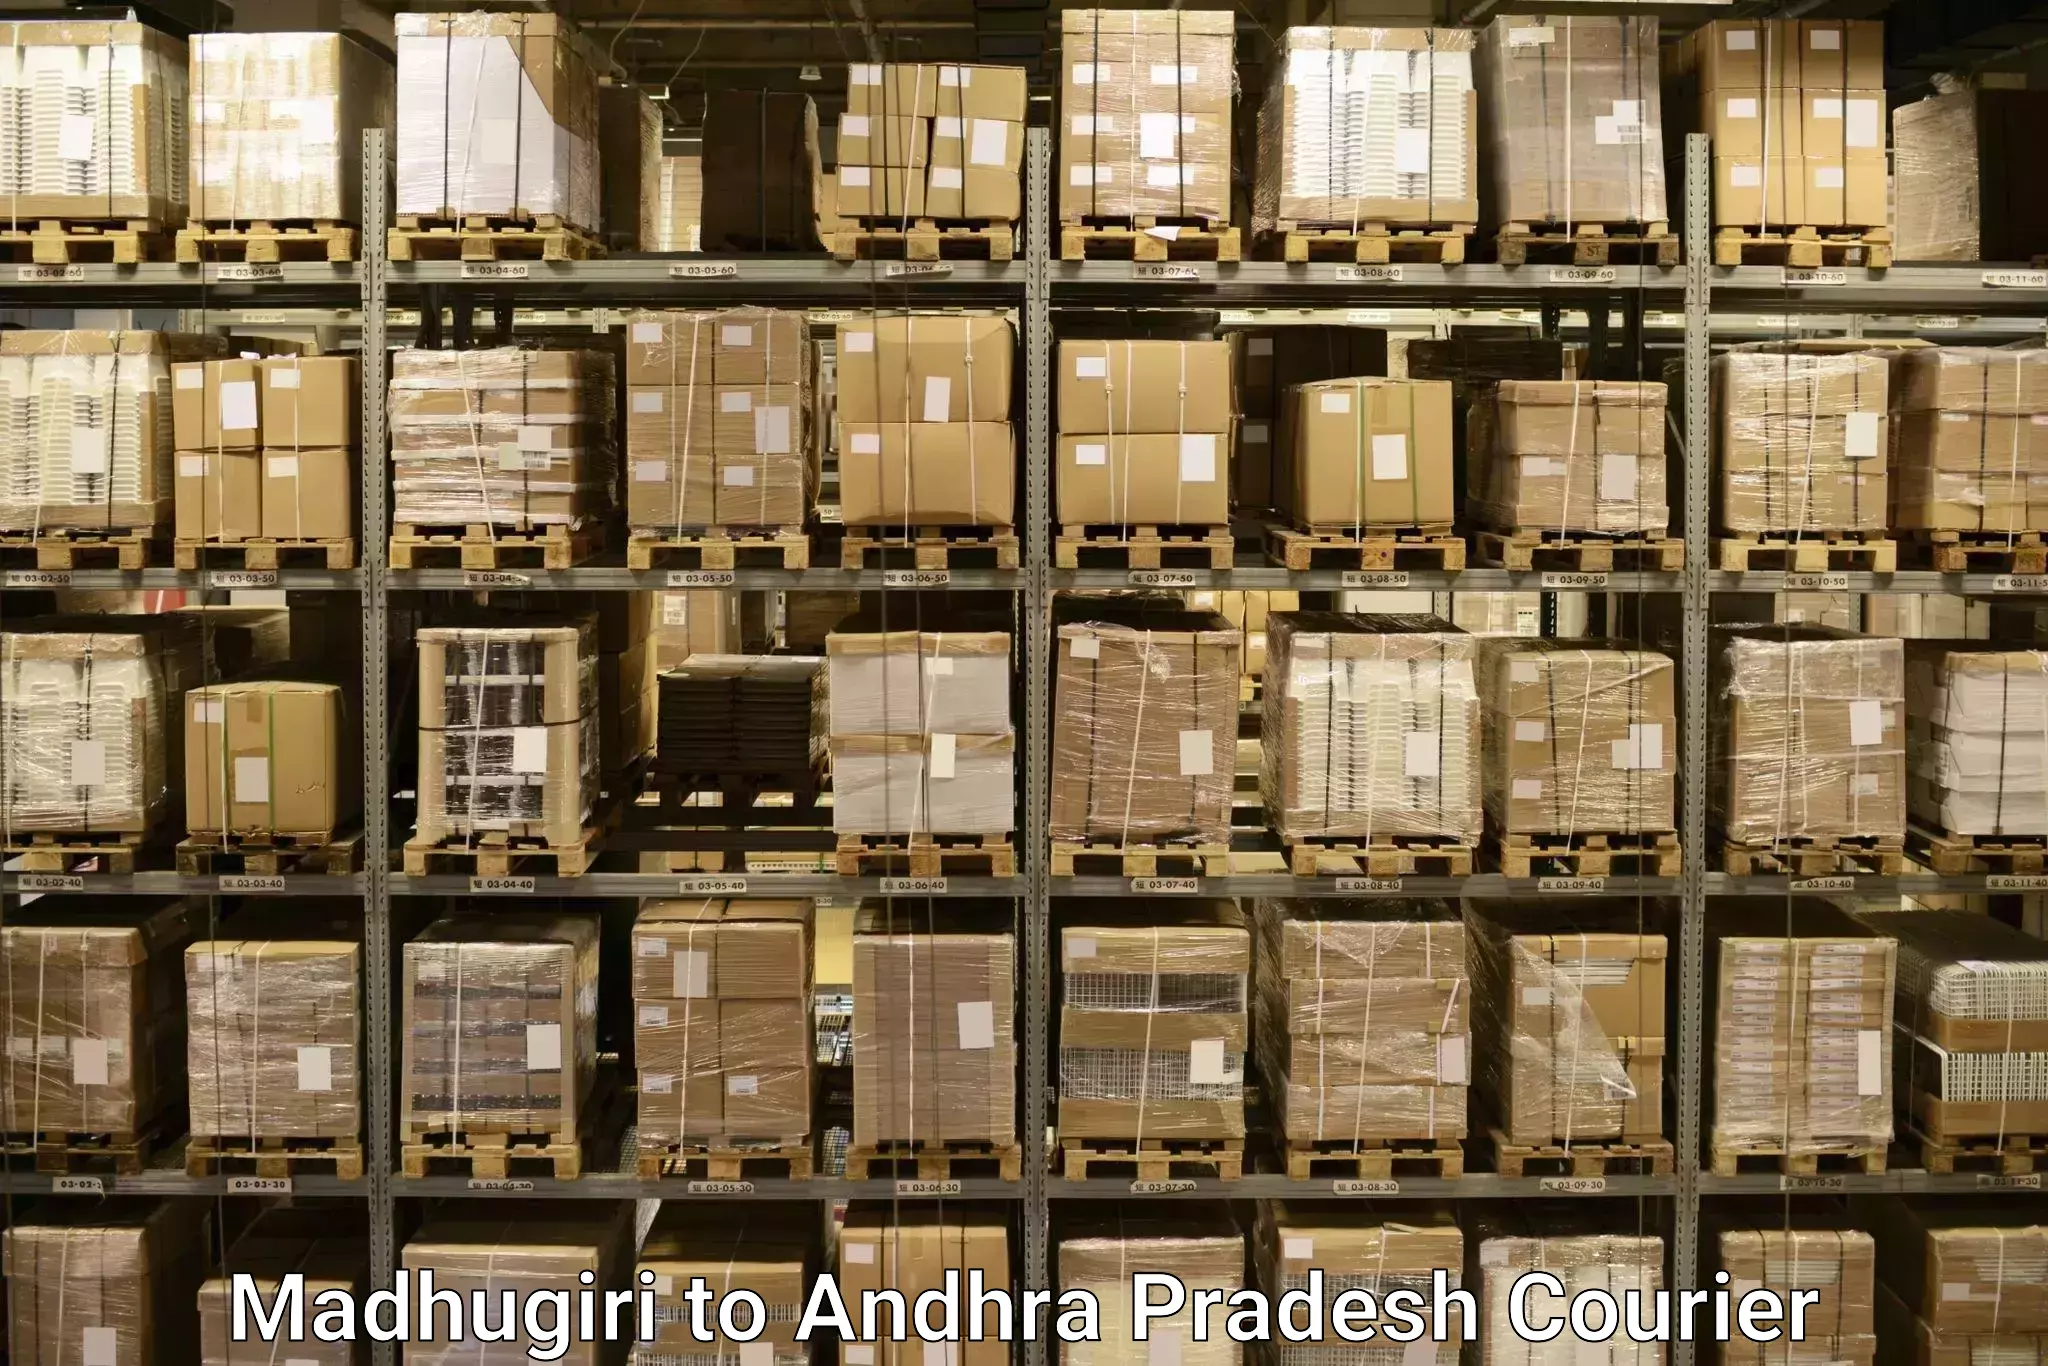 Personal effects shipping in Madhugiri to Pakala